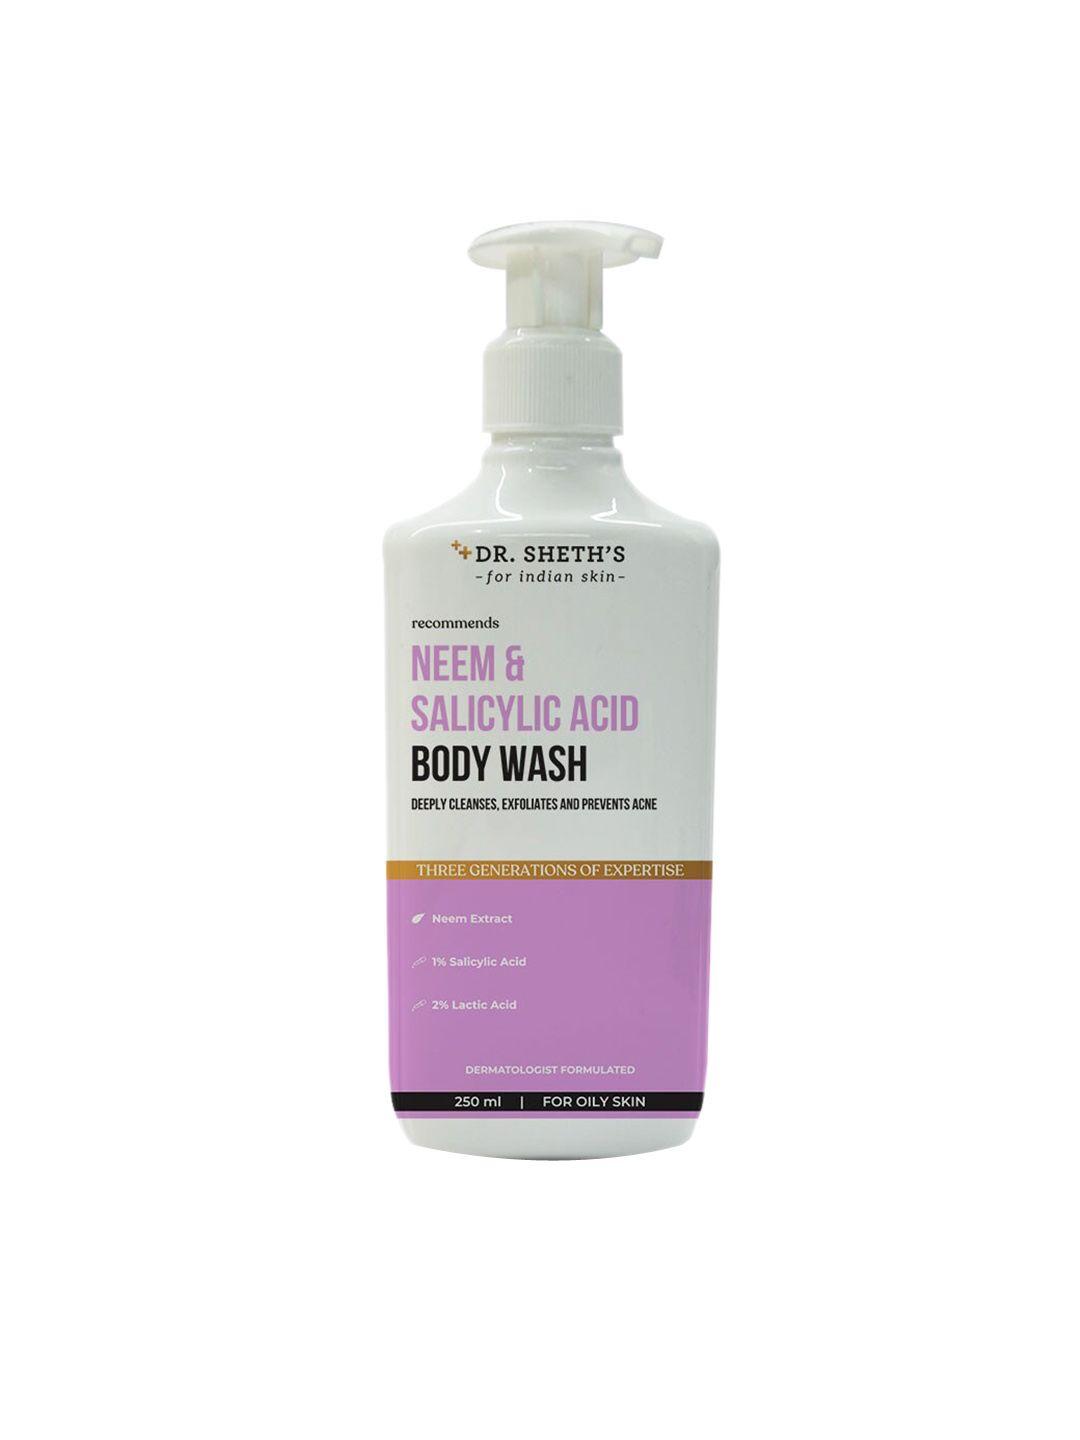 dr. sheths neem & salicylic acid body wash - prevents body acne - 250ml